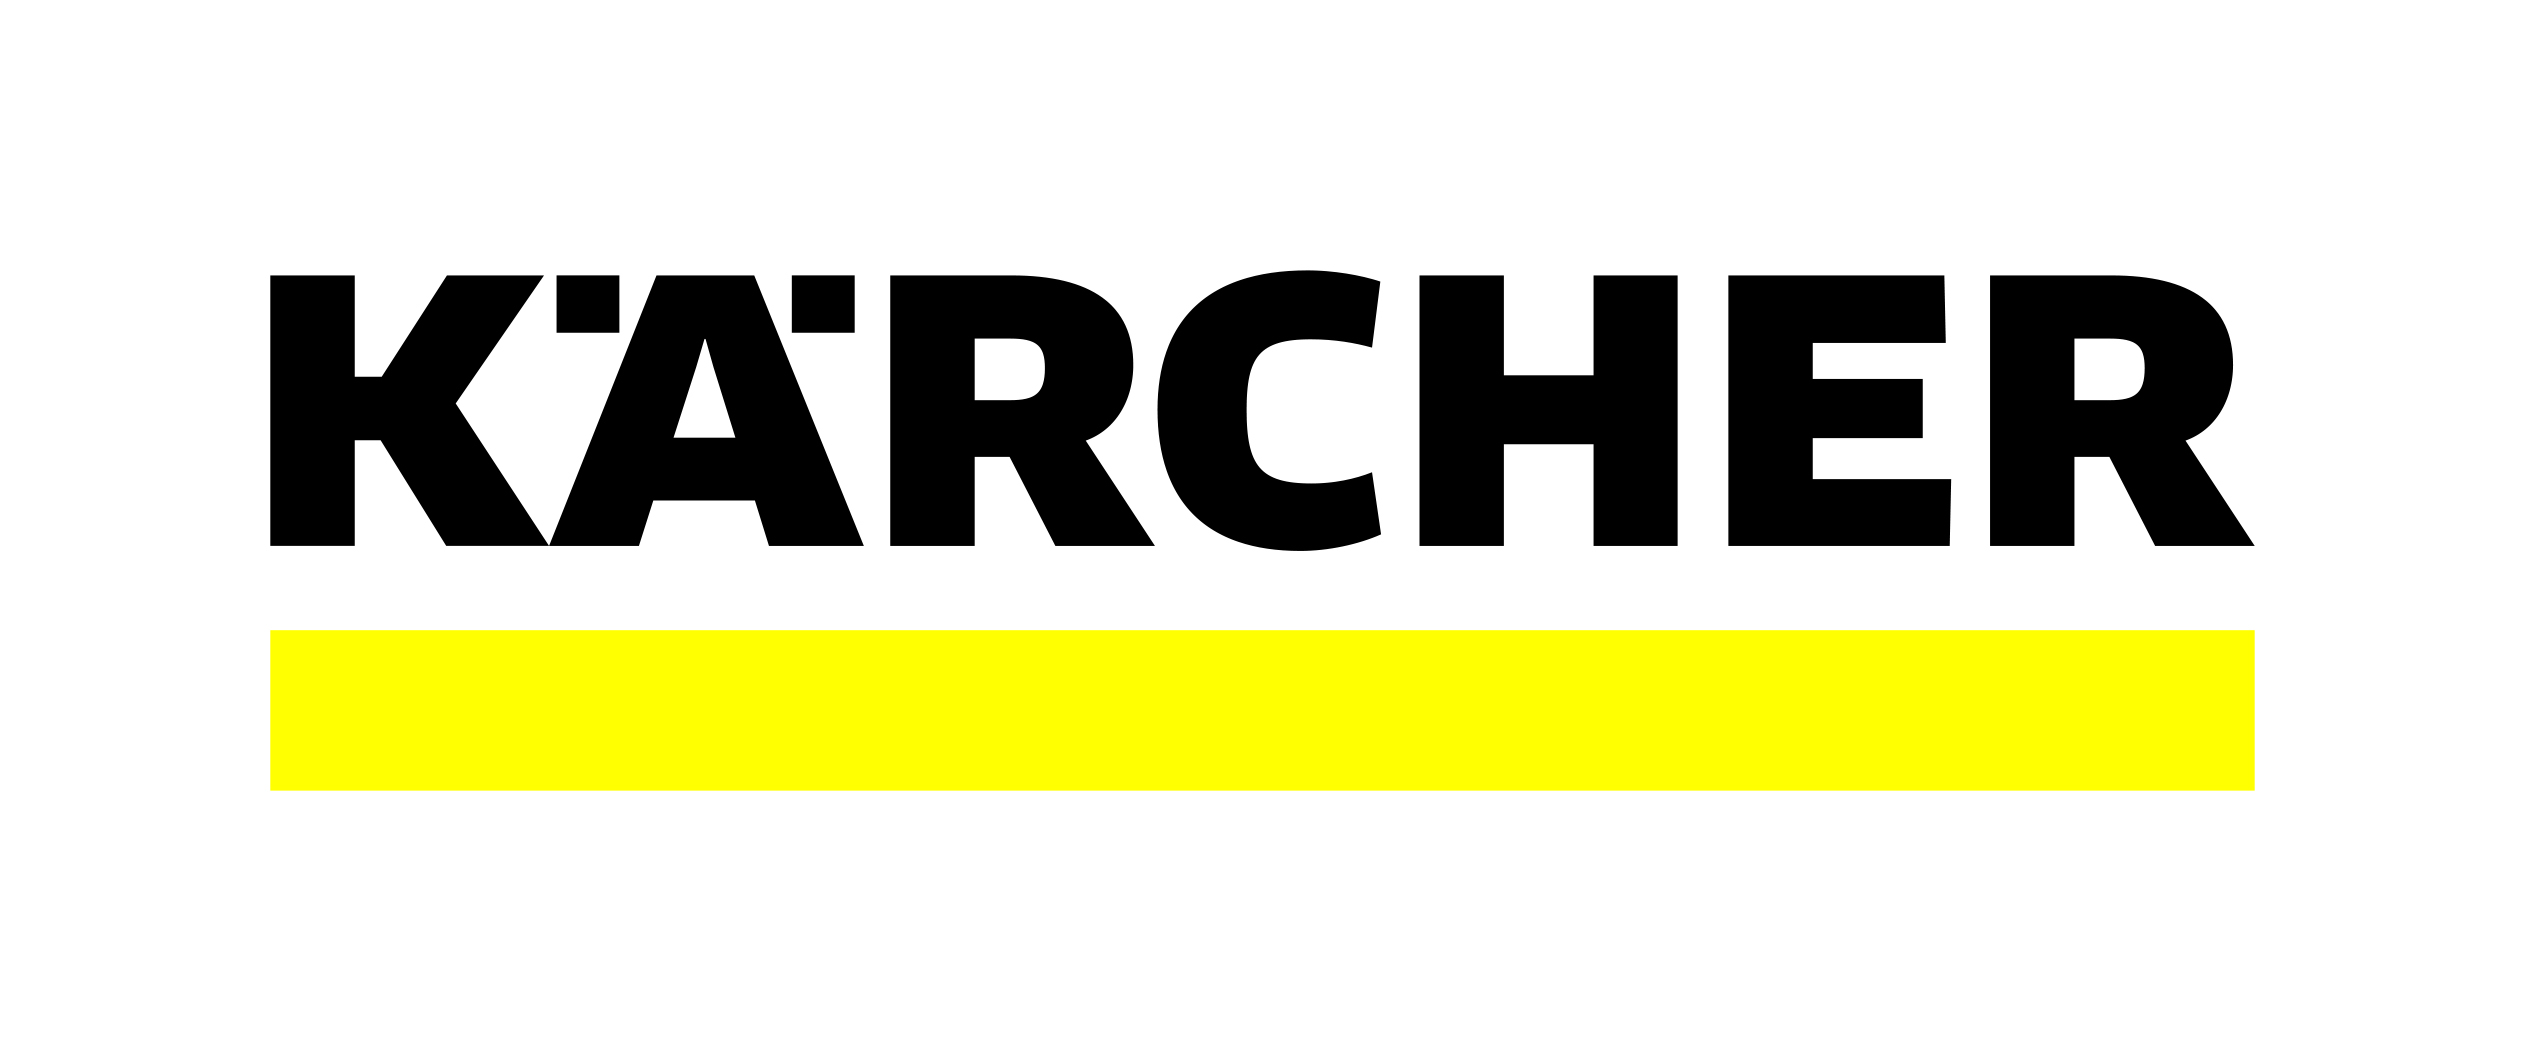 kaercher-logo-2015-co.jpg